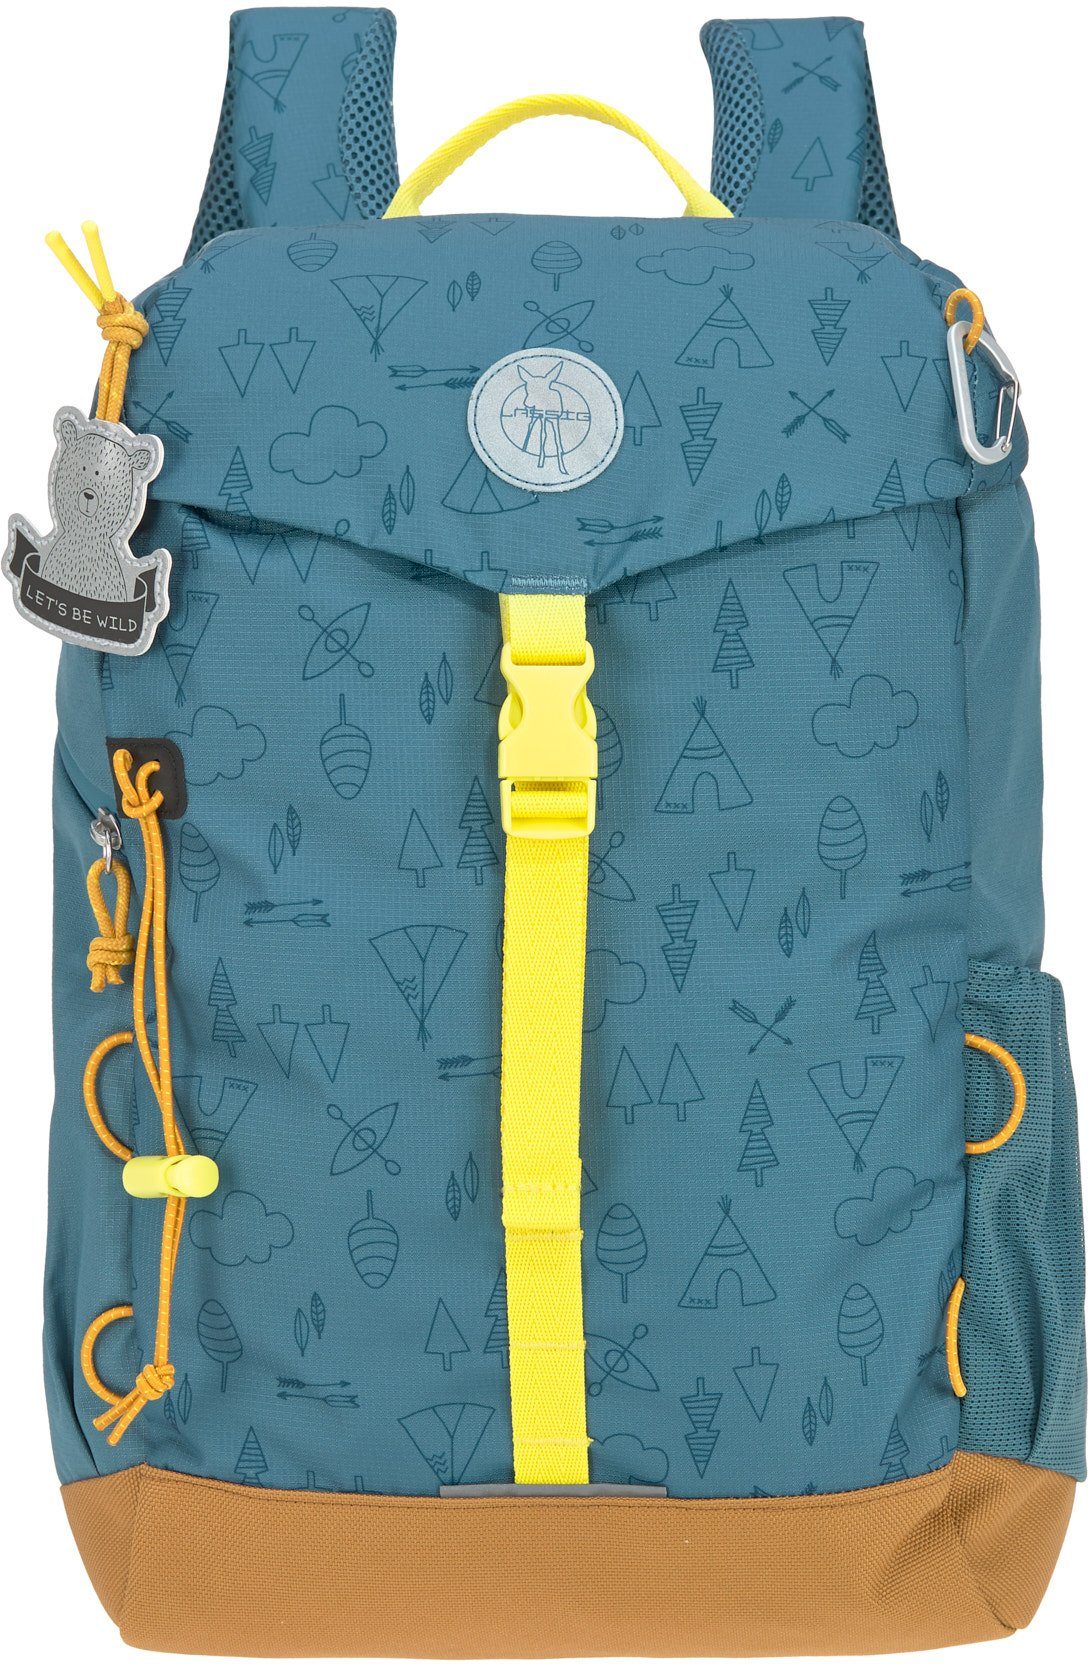 LÄSSIG Kinderrucksack Adventure, Blue, Big Backpack, inkl. thermoisolierter Sitzunterlage; aus recyceltem Material